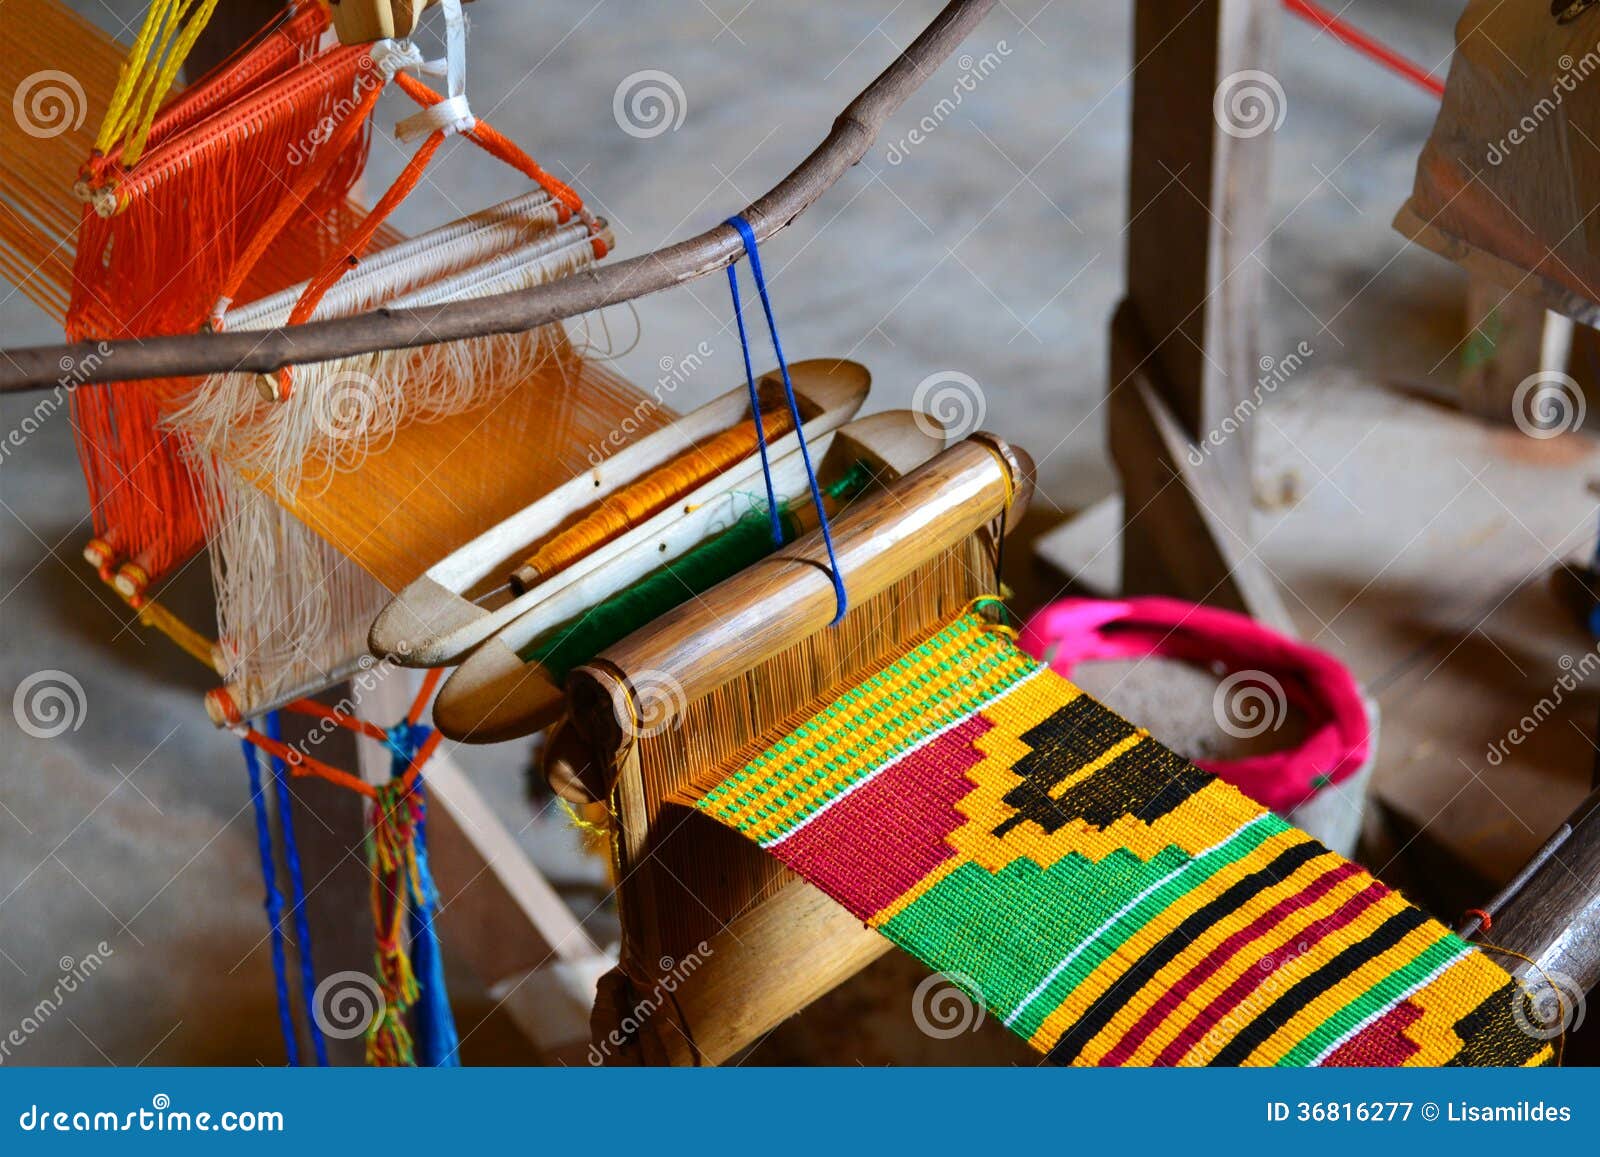 kente cloth weaving